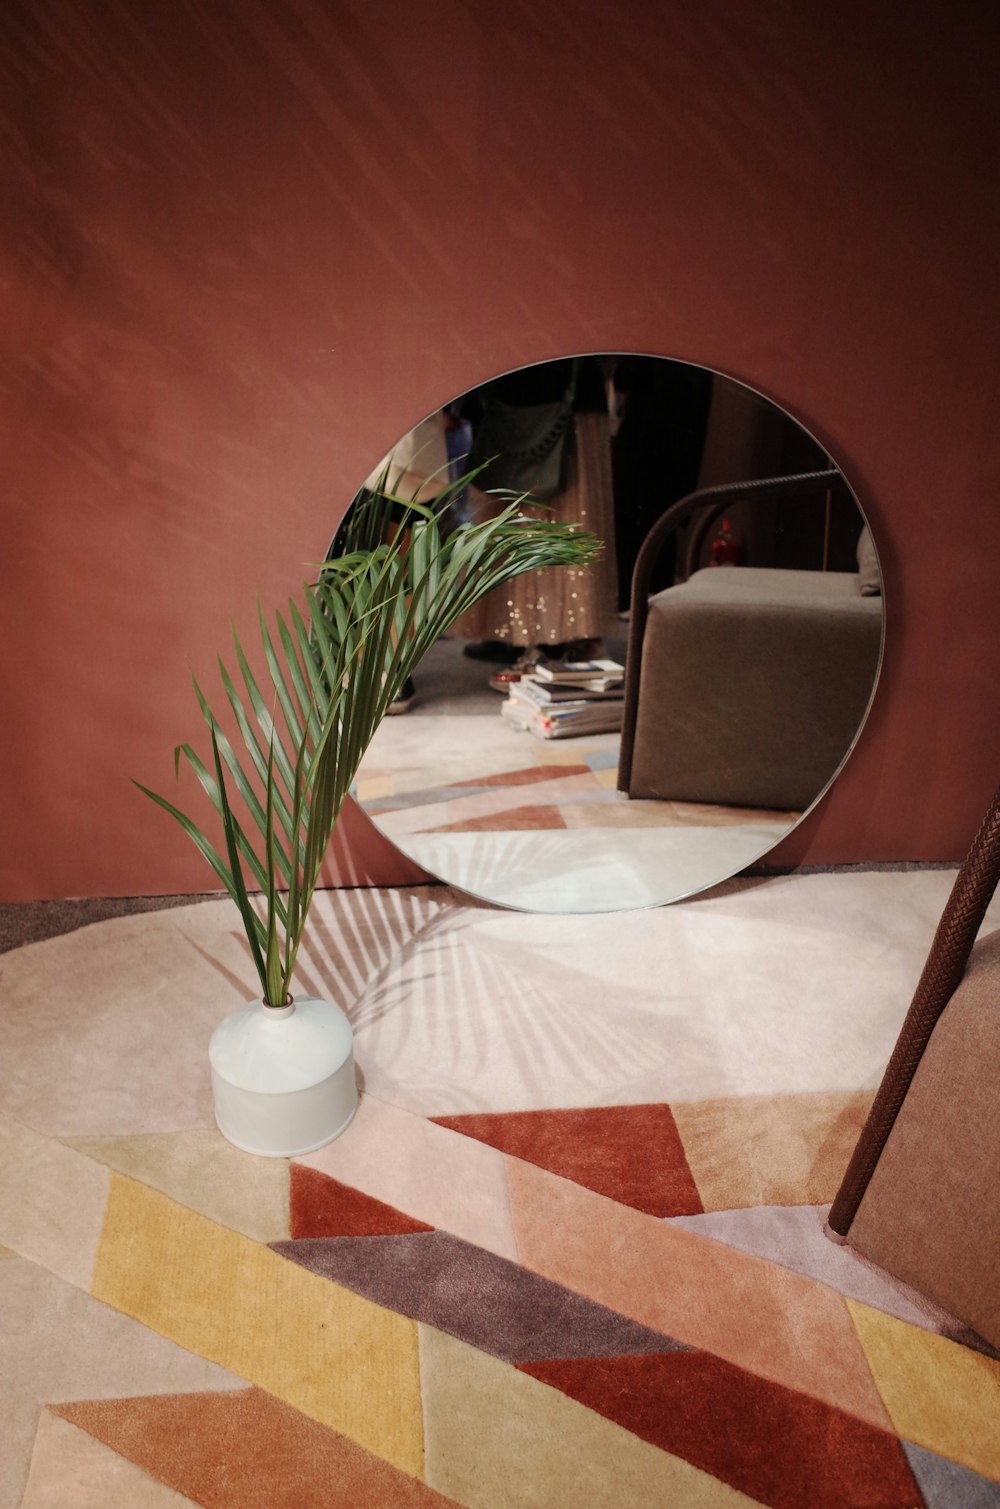 round mirror behind potted flower on floor inside room